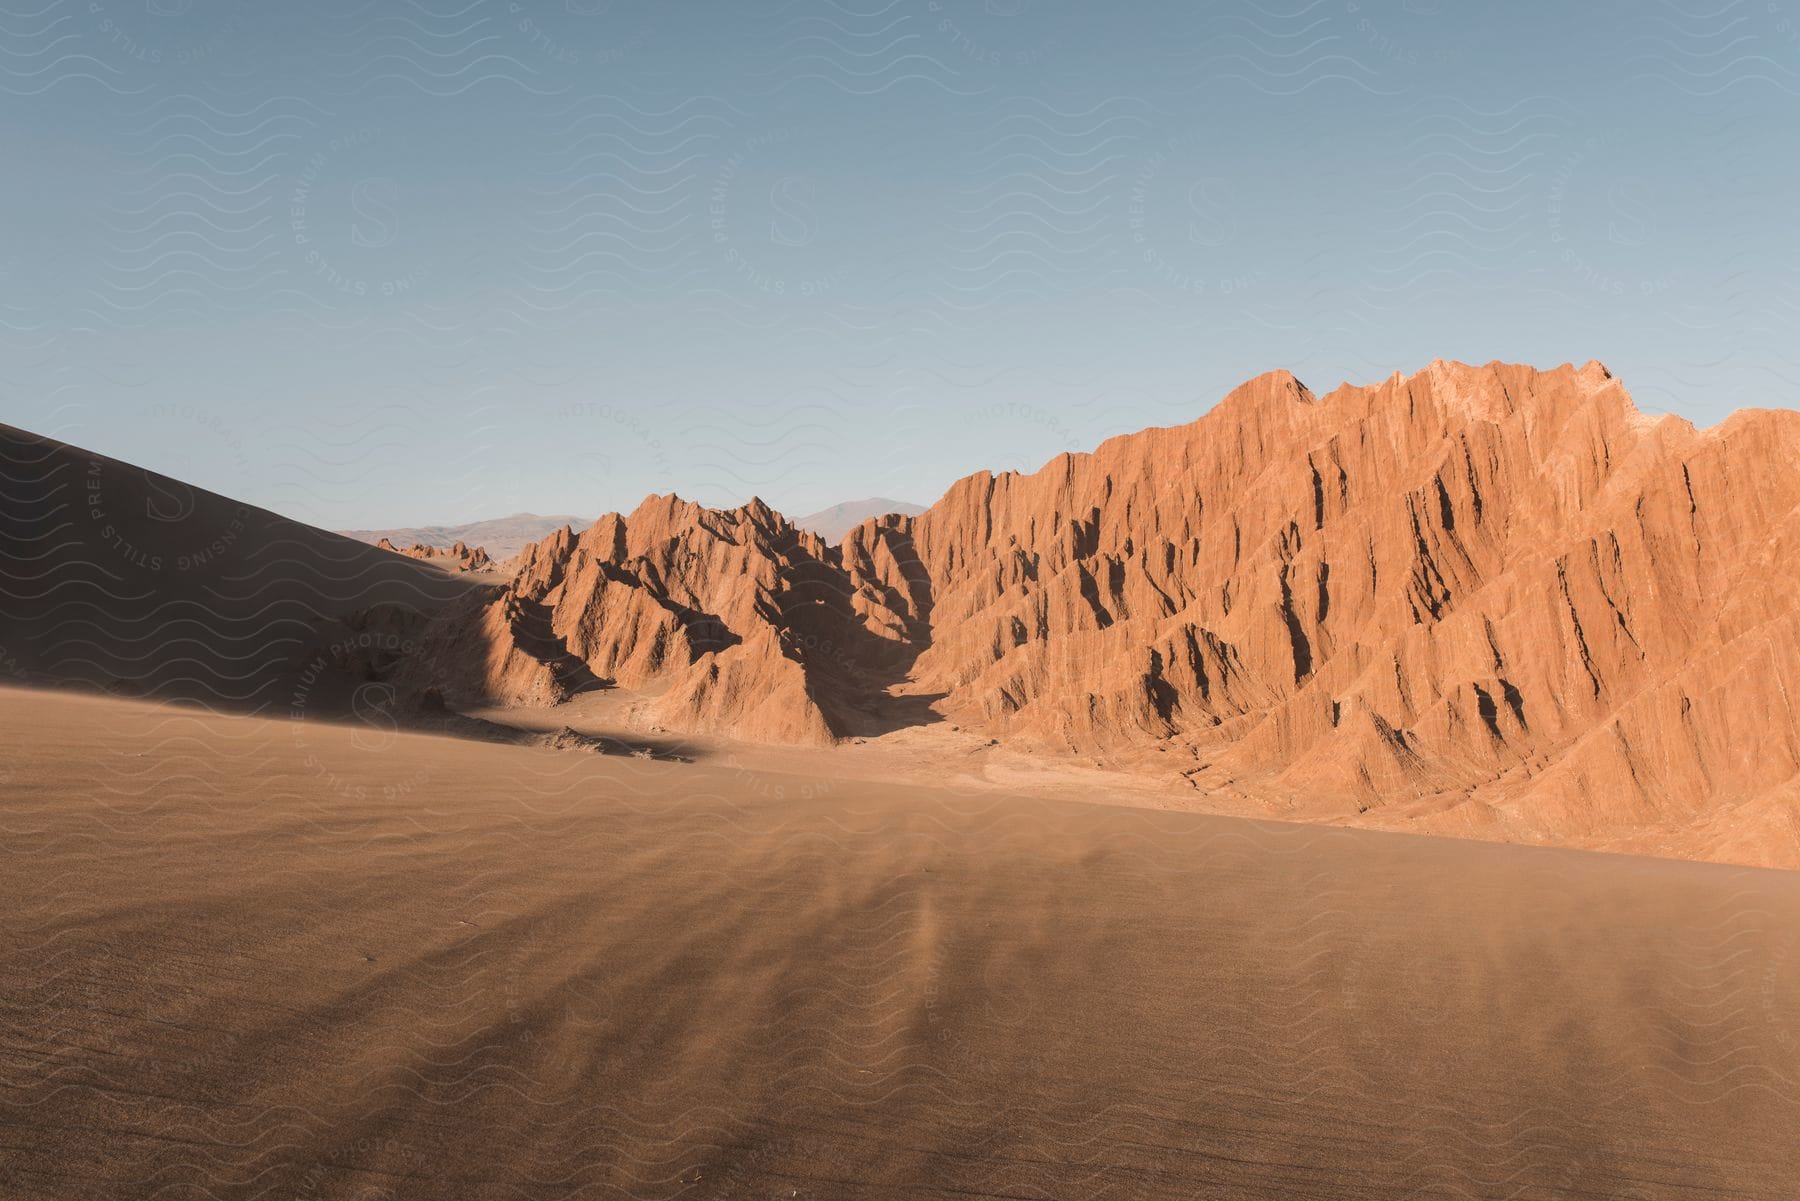 Rocky mountains in a desert landscape